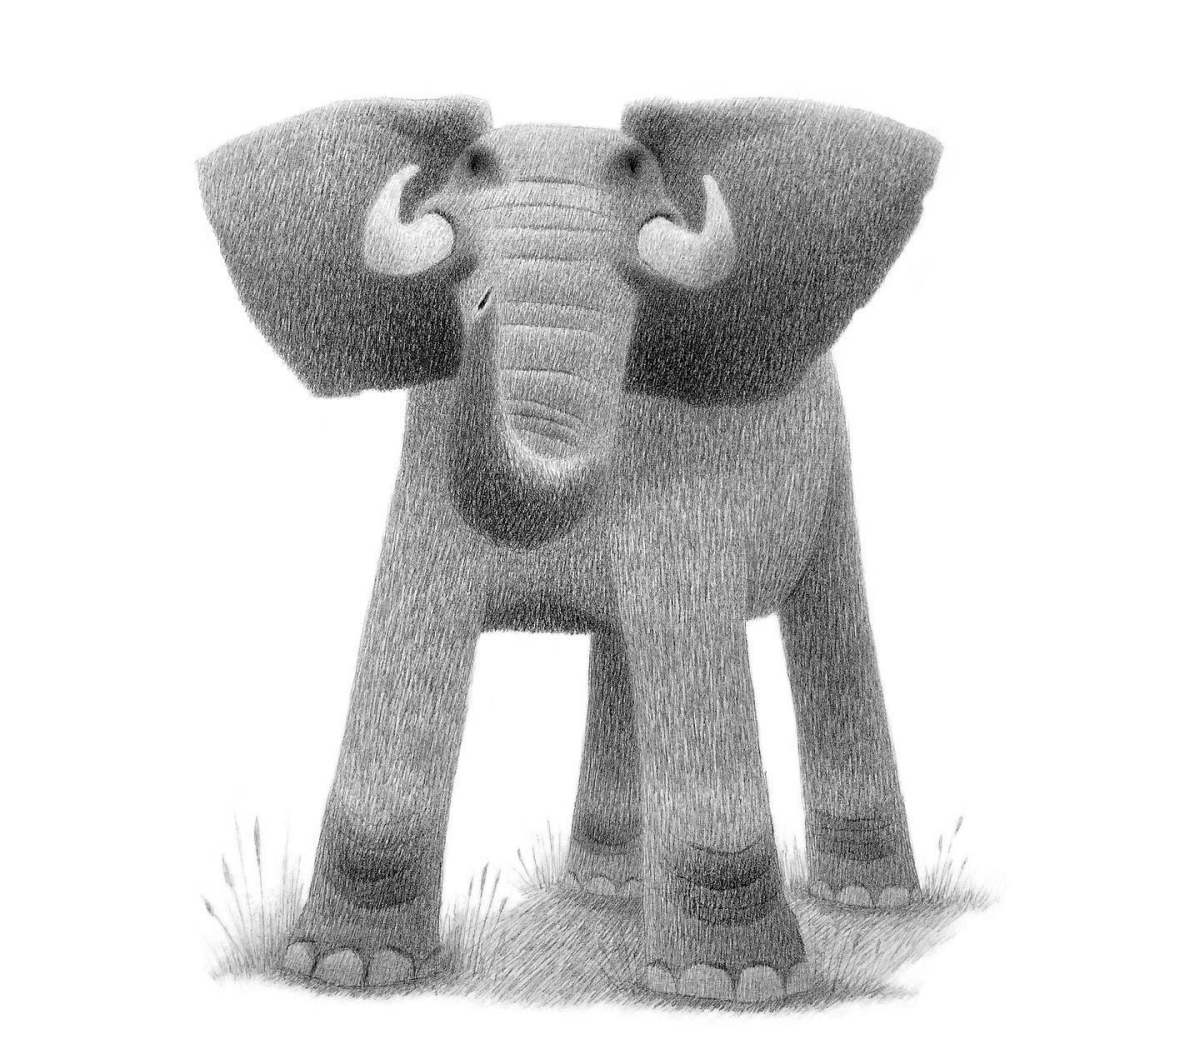 charcoal art elephant